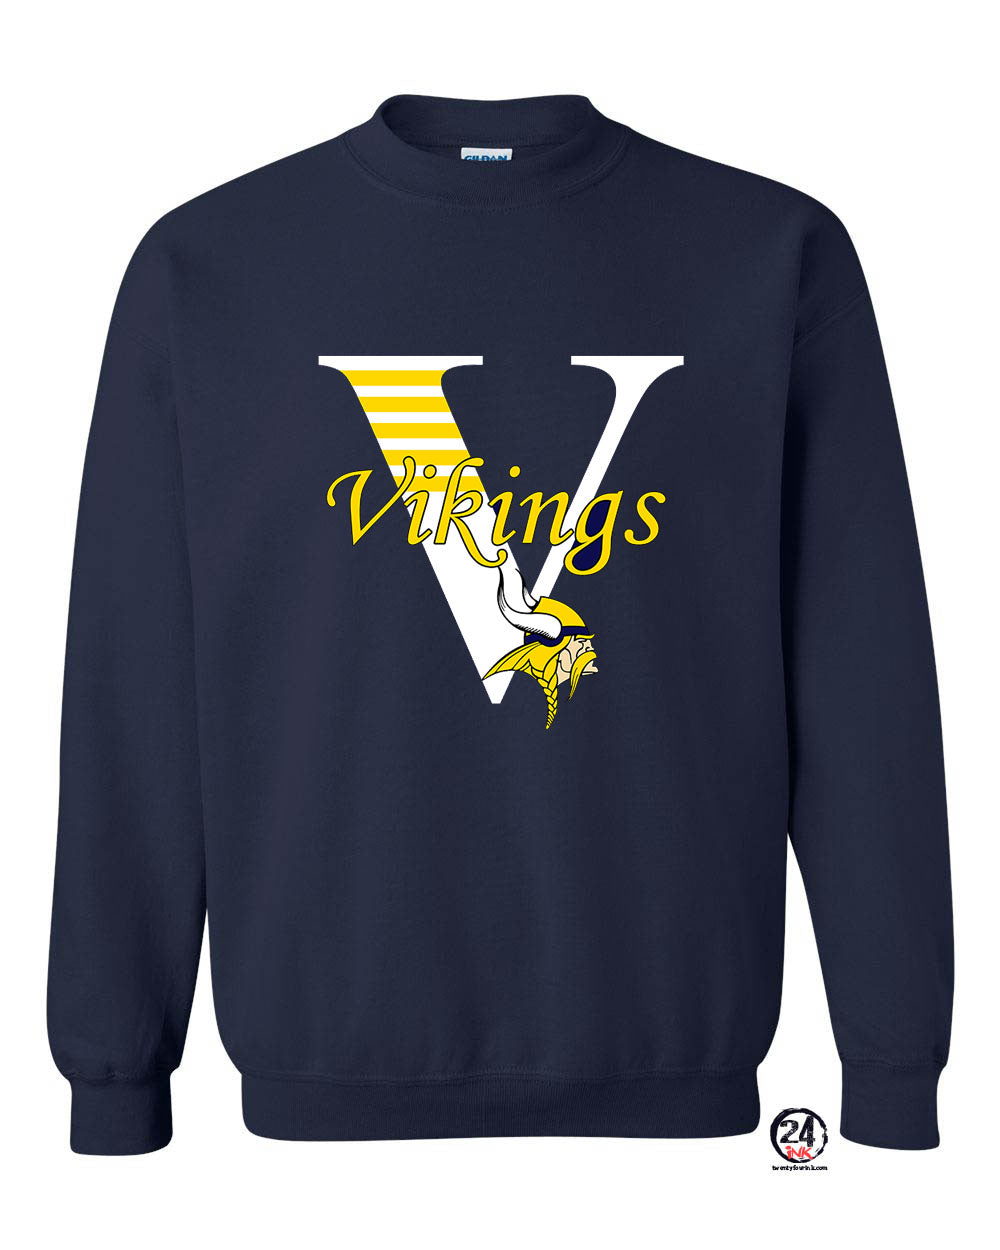 Vernon design 5 non hooded sweatshirt